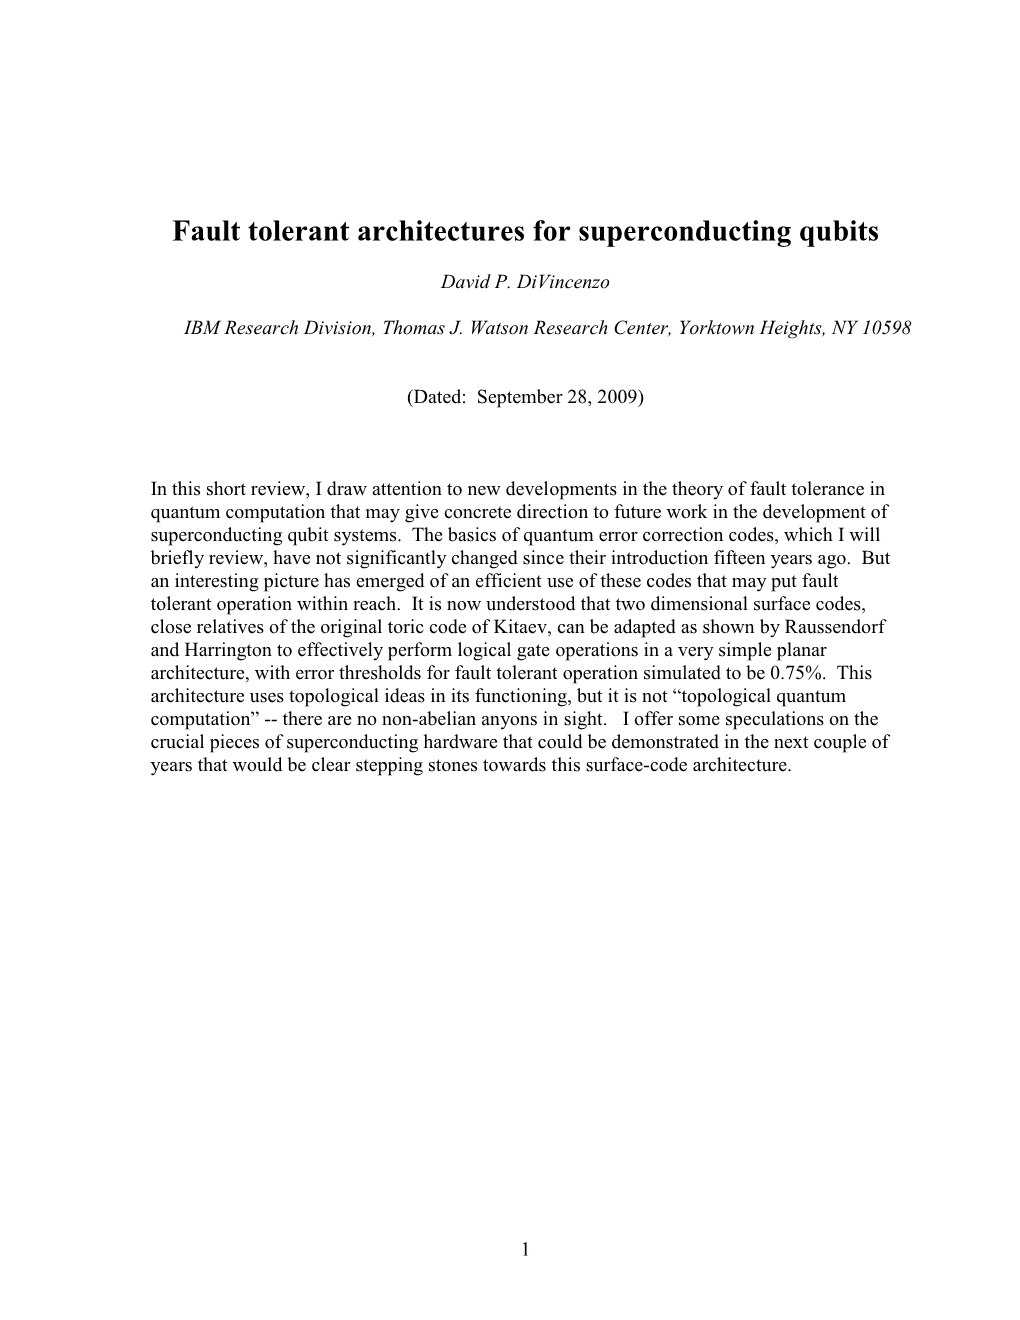 Fault Tolerant Architectures for Superconducting Qubits